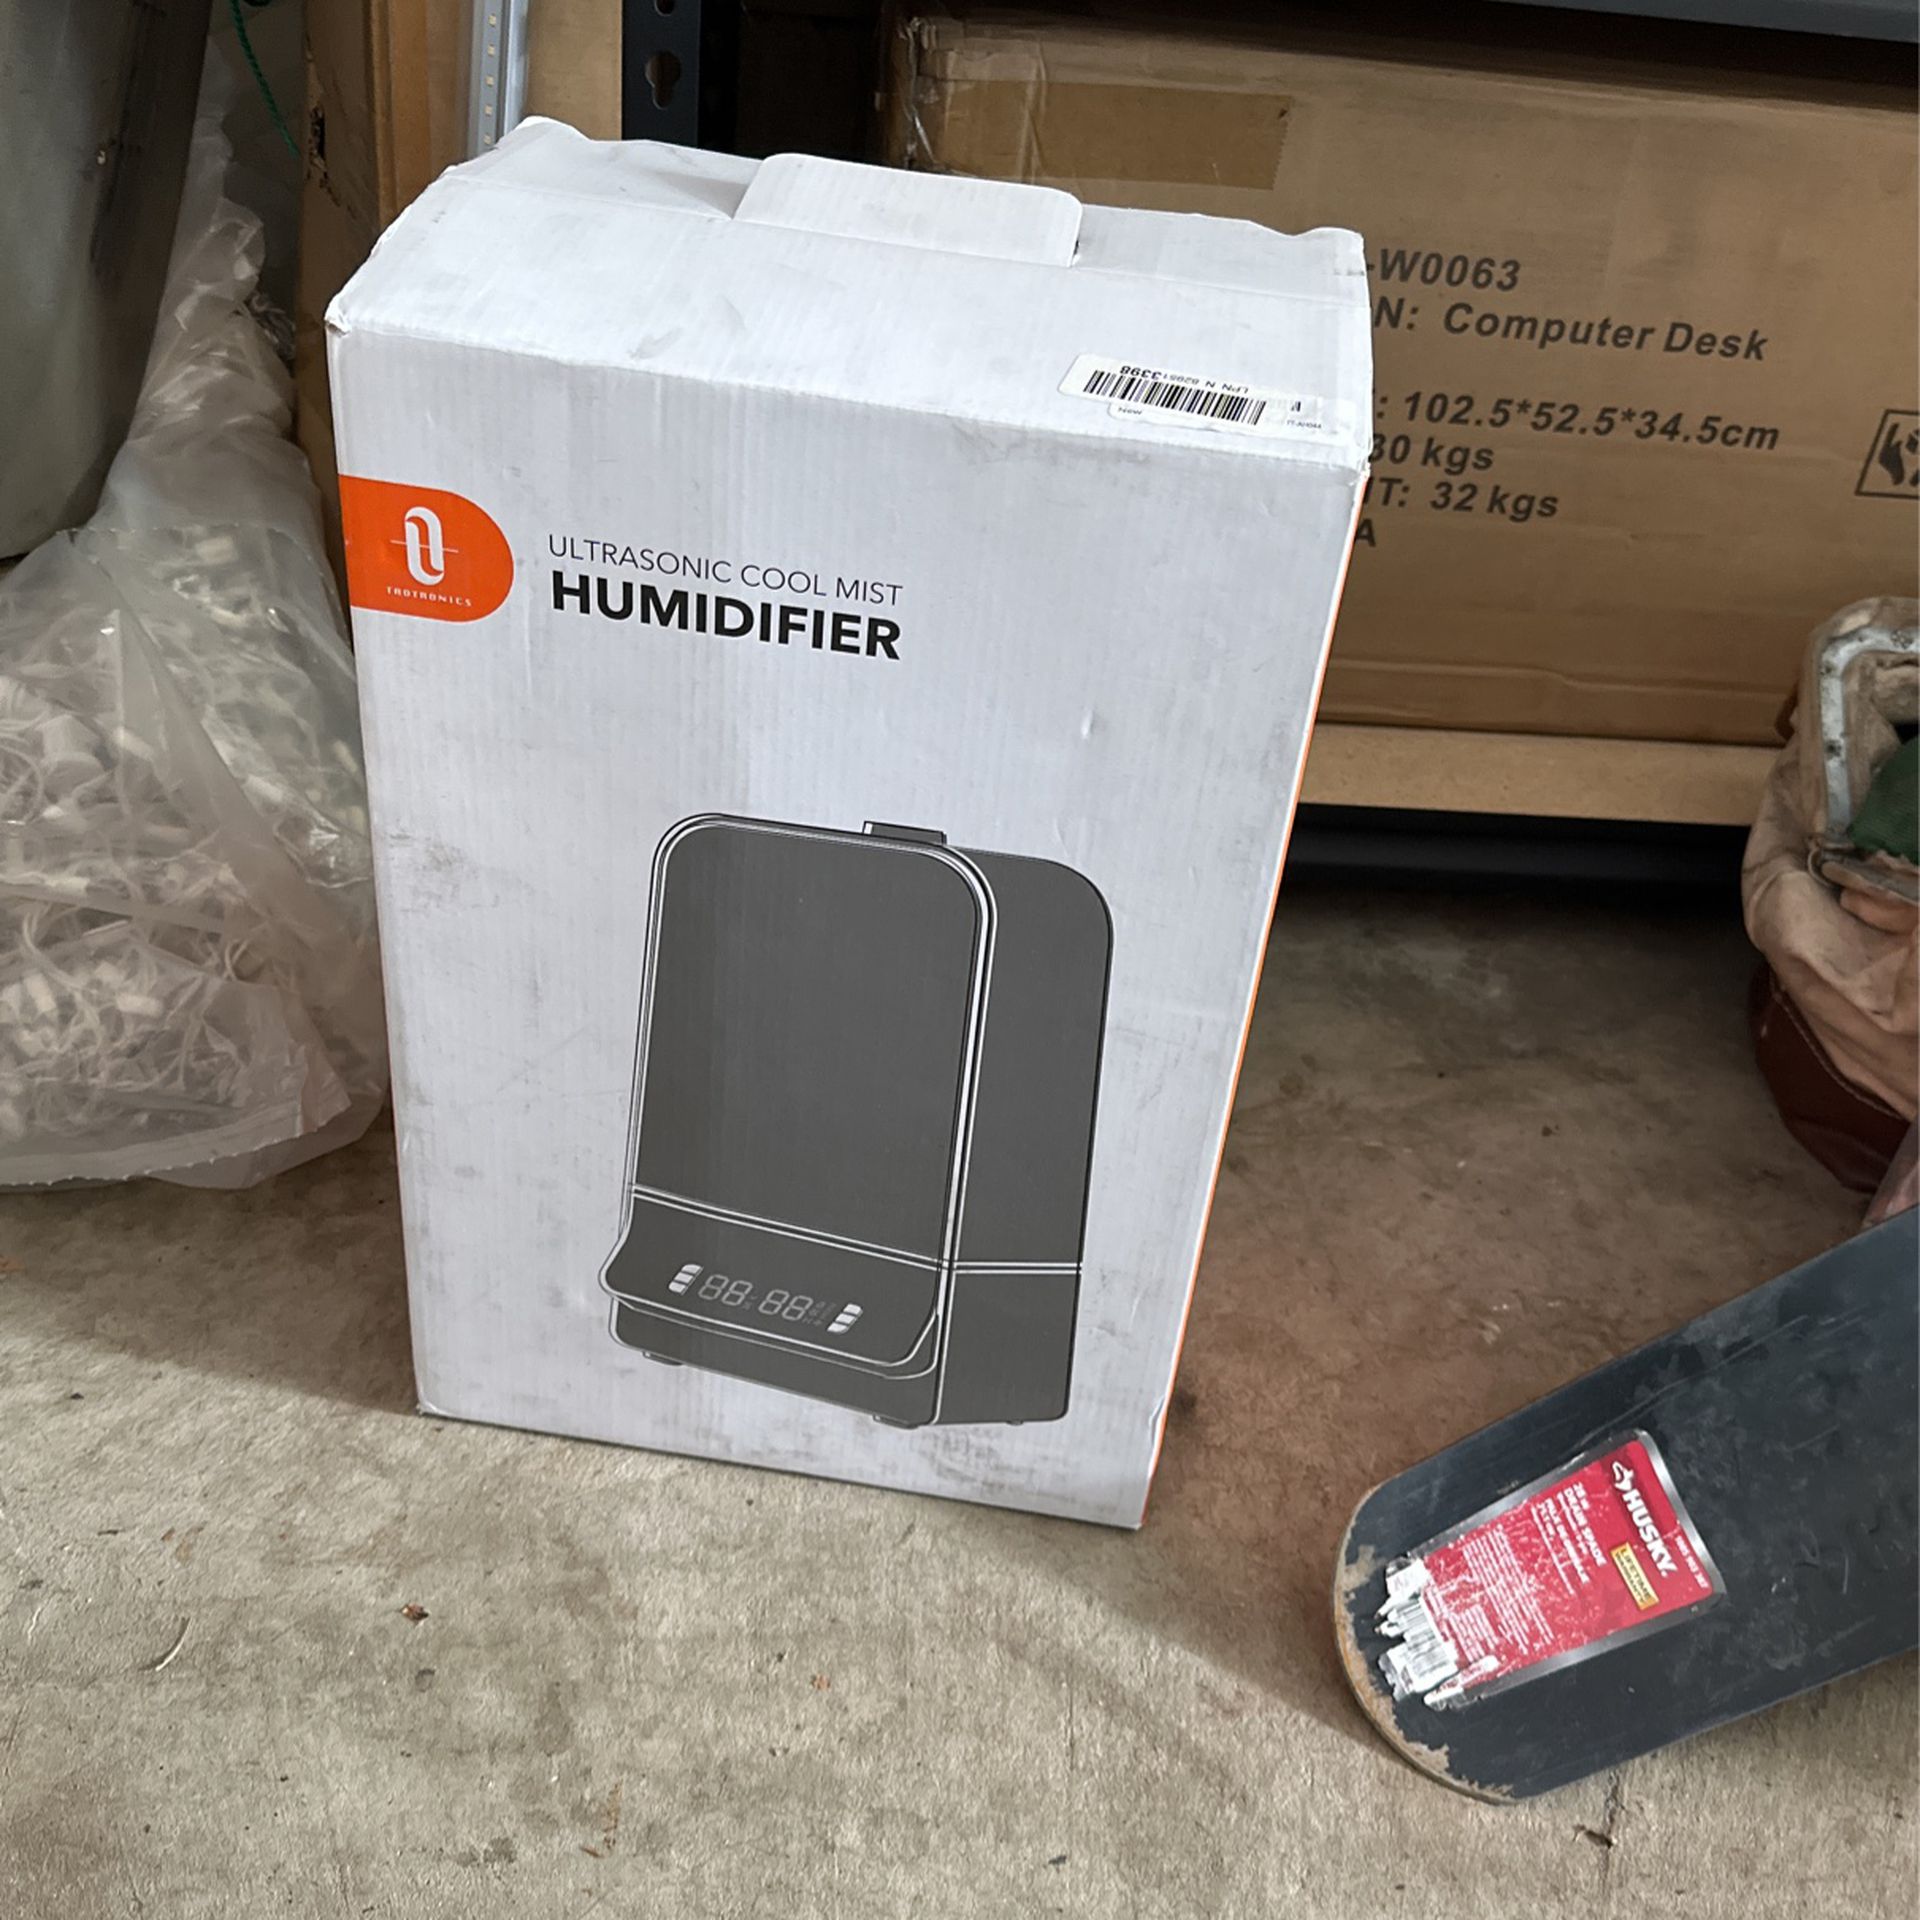 Ultrasonic Cool Must Humidifier New